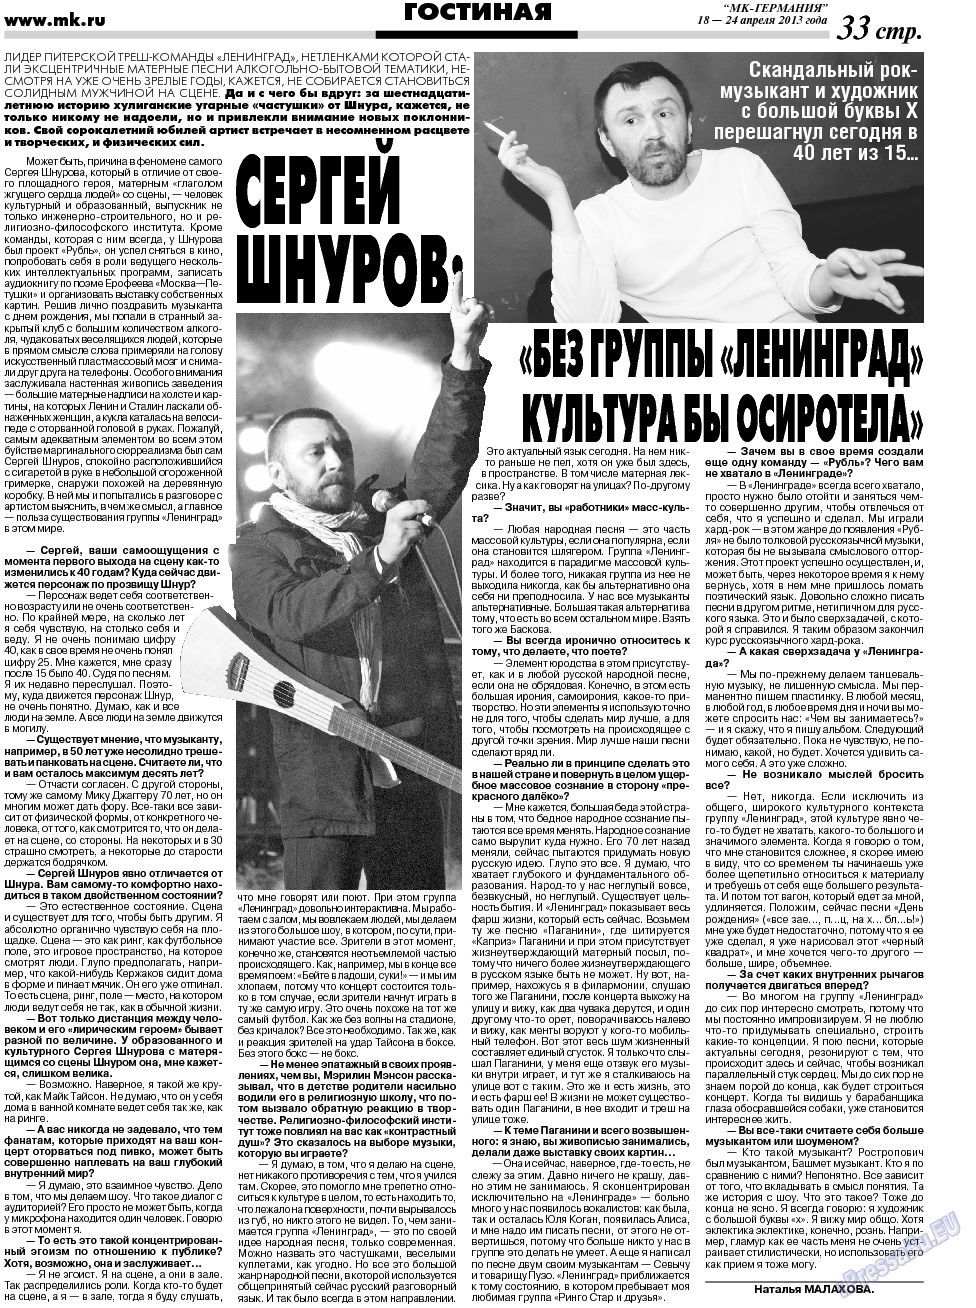 МК-Германия, газета. 2013 №16 стр.33